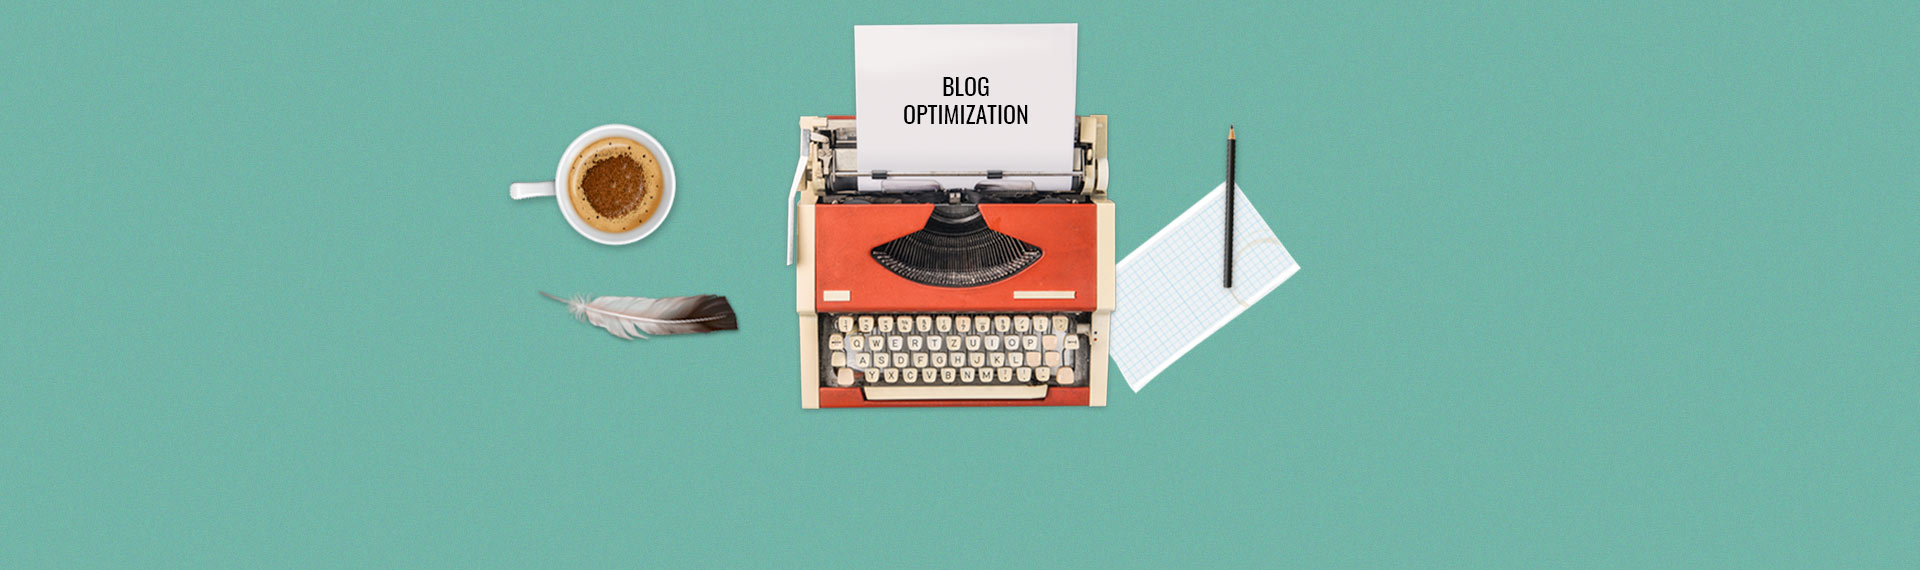 Blog Optimization